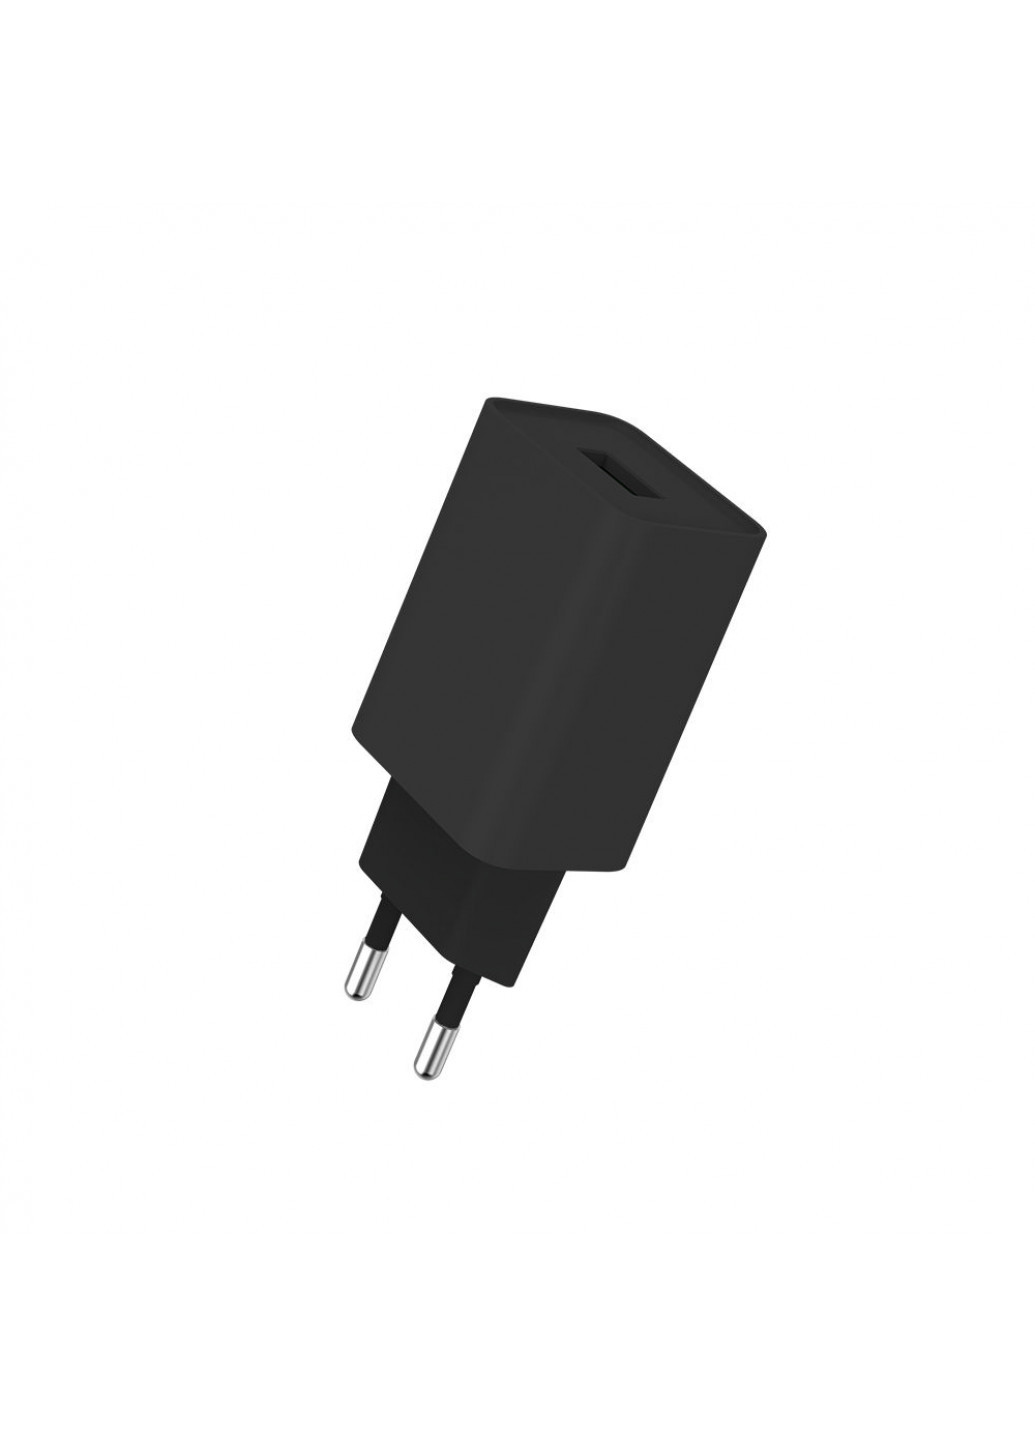 Сетевое зарядное устройство 1USB Quick Charge 3.0 (18W) Black + кабель MicroUSB () Colorway CW-CHS013QCM-BK